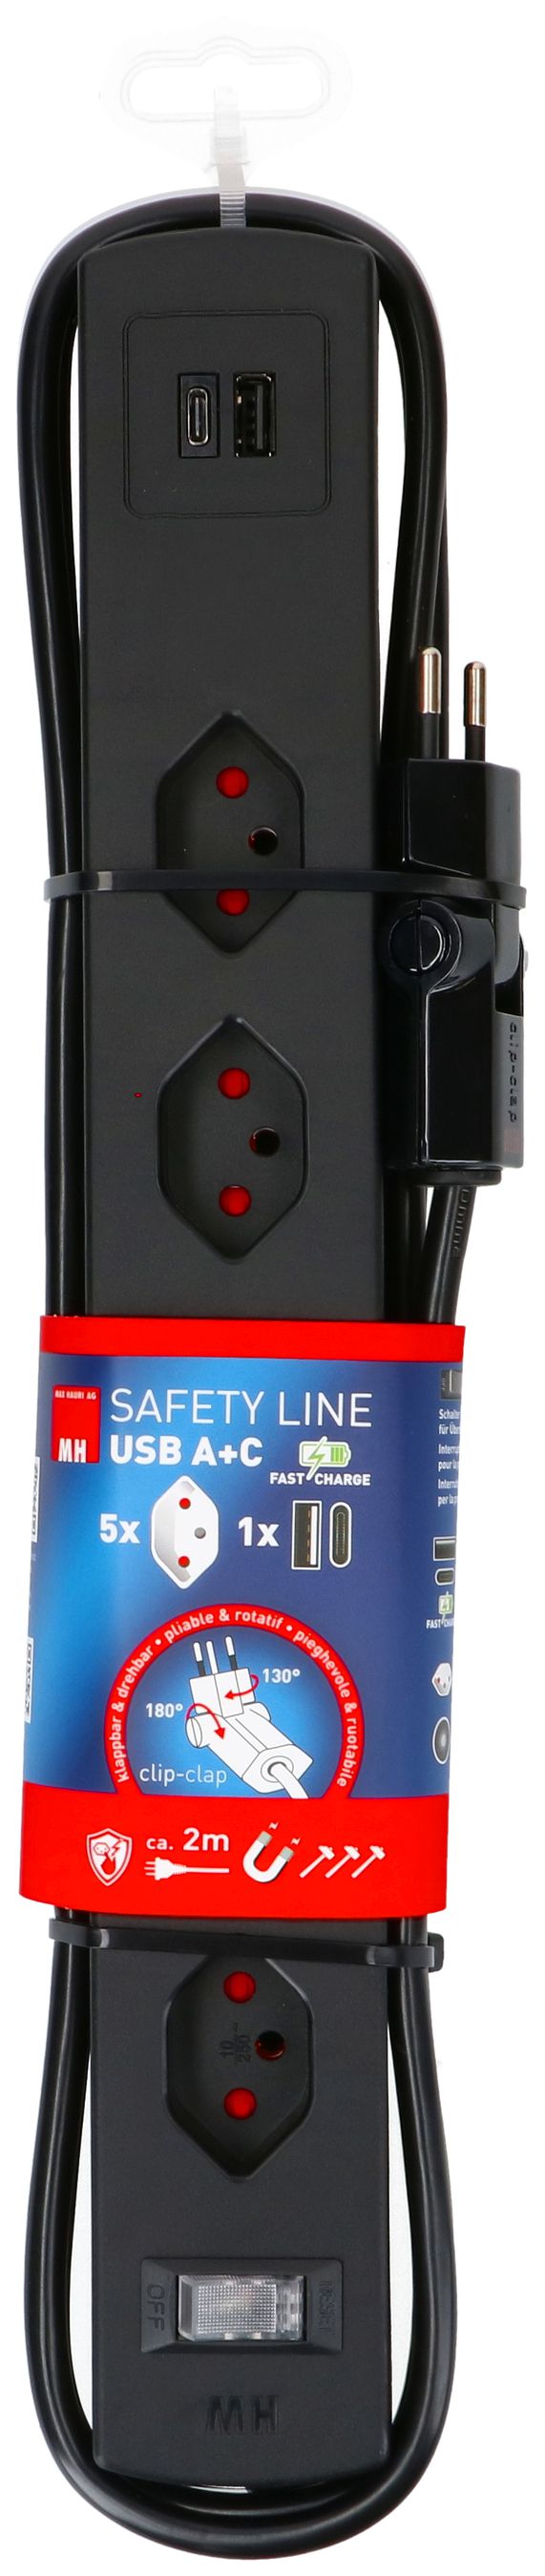 multip. Safety Line 5x type 13 90° BS nr interr. USB aim. 2m cli.